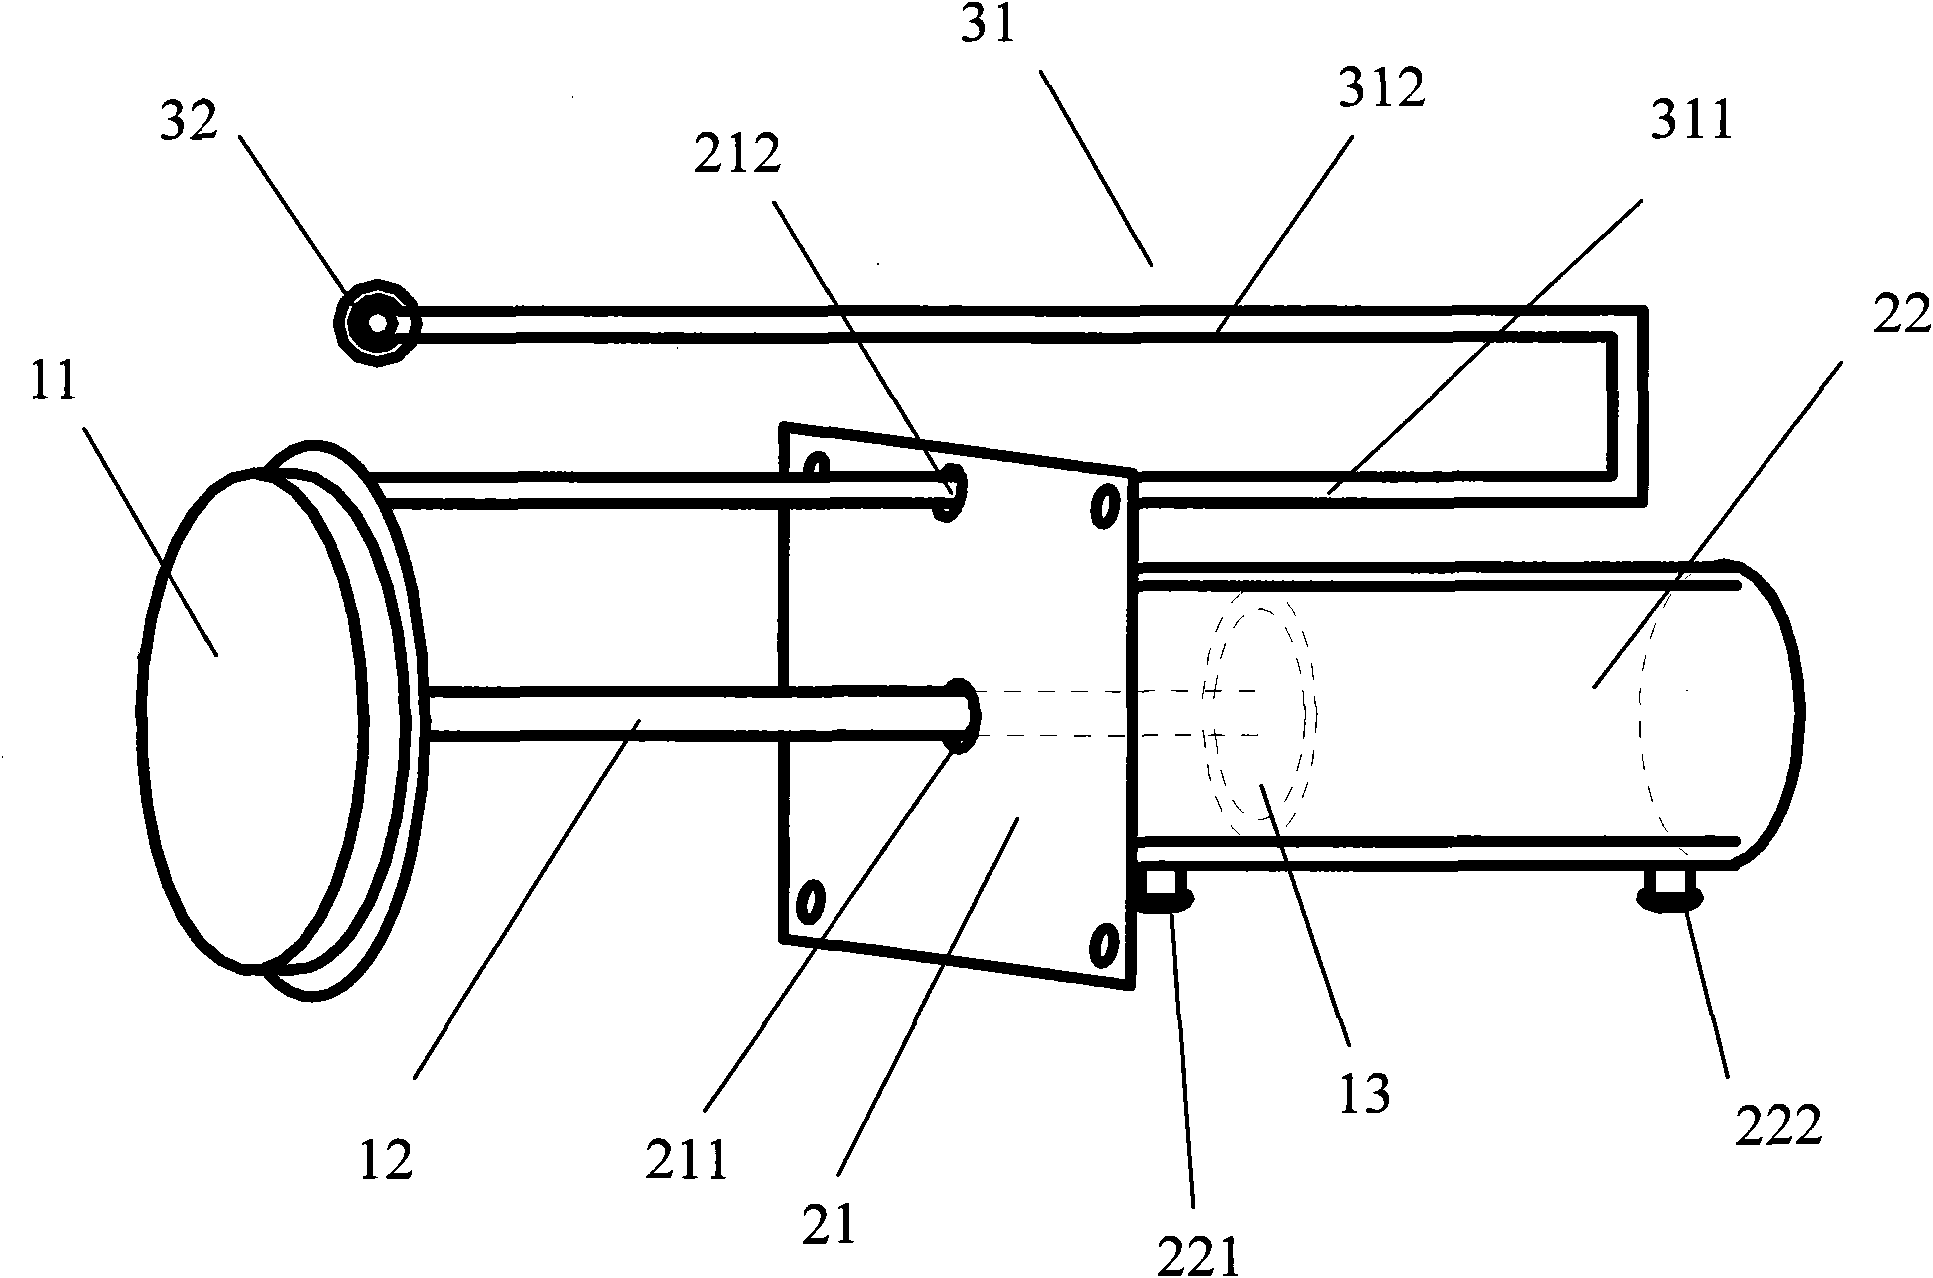 Air valve device